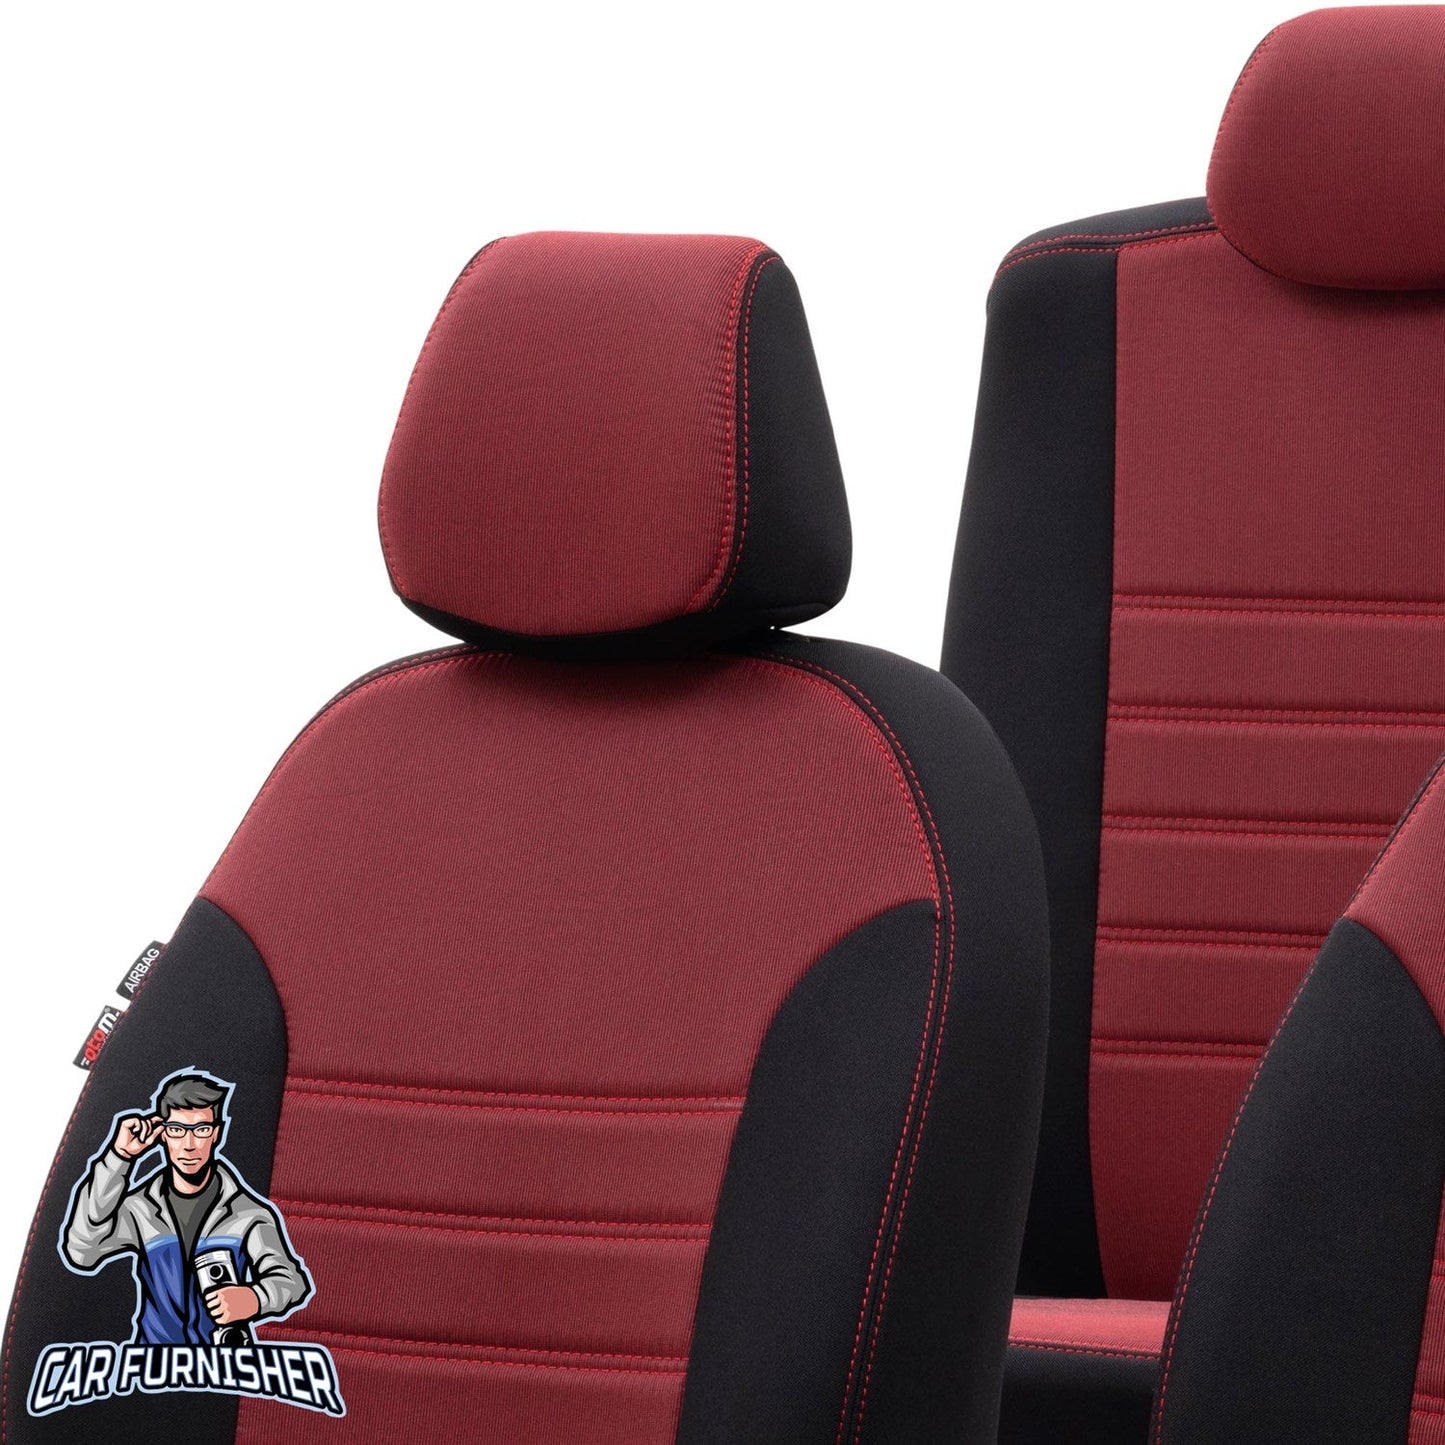 Toyota Auris Seat Cover Original Jacquard Design Dark Beige Jacquard Fabric